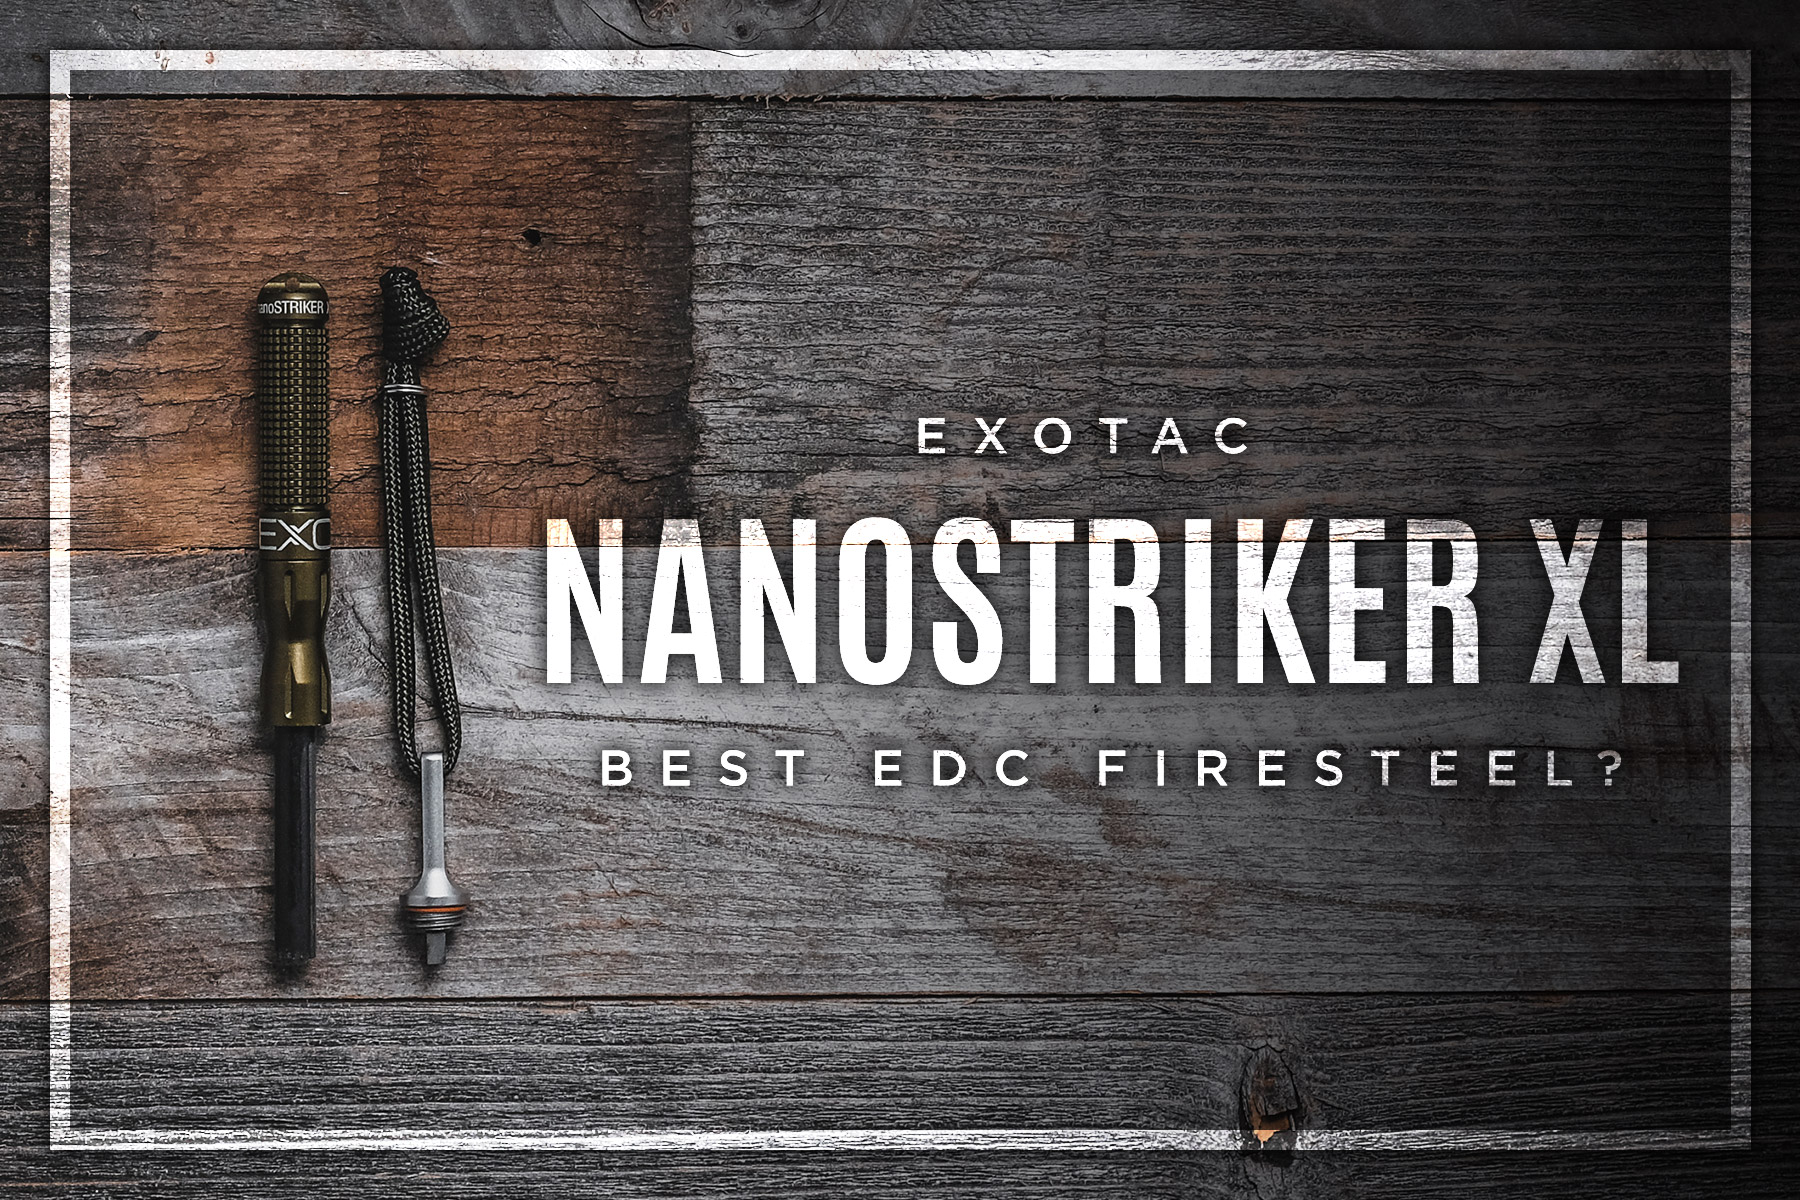 Exotac nanoSTRIKER XL Review • Best EDC Firesteel? Let's see!